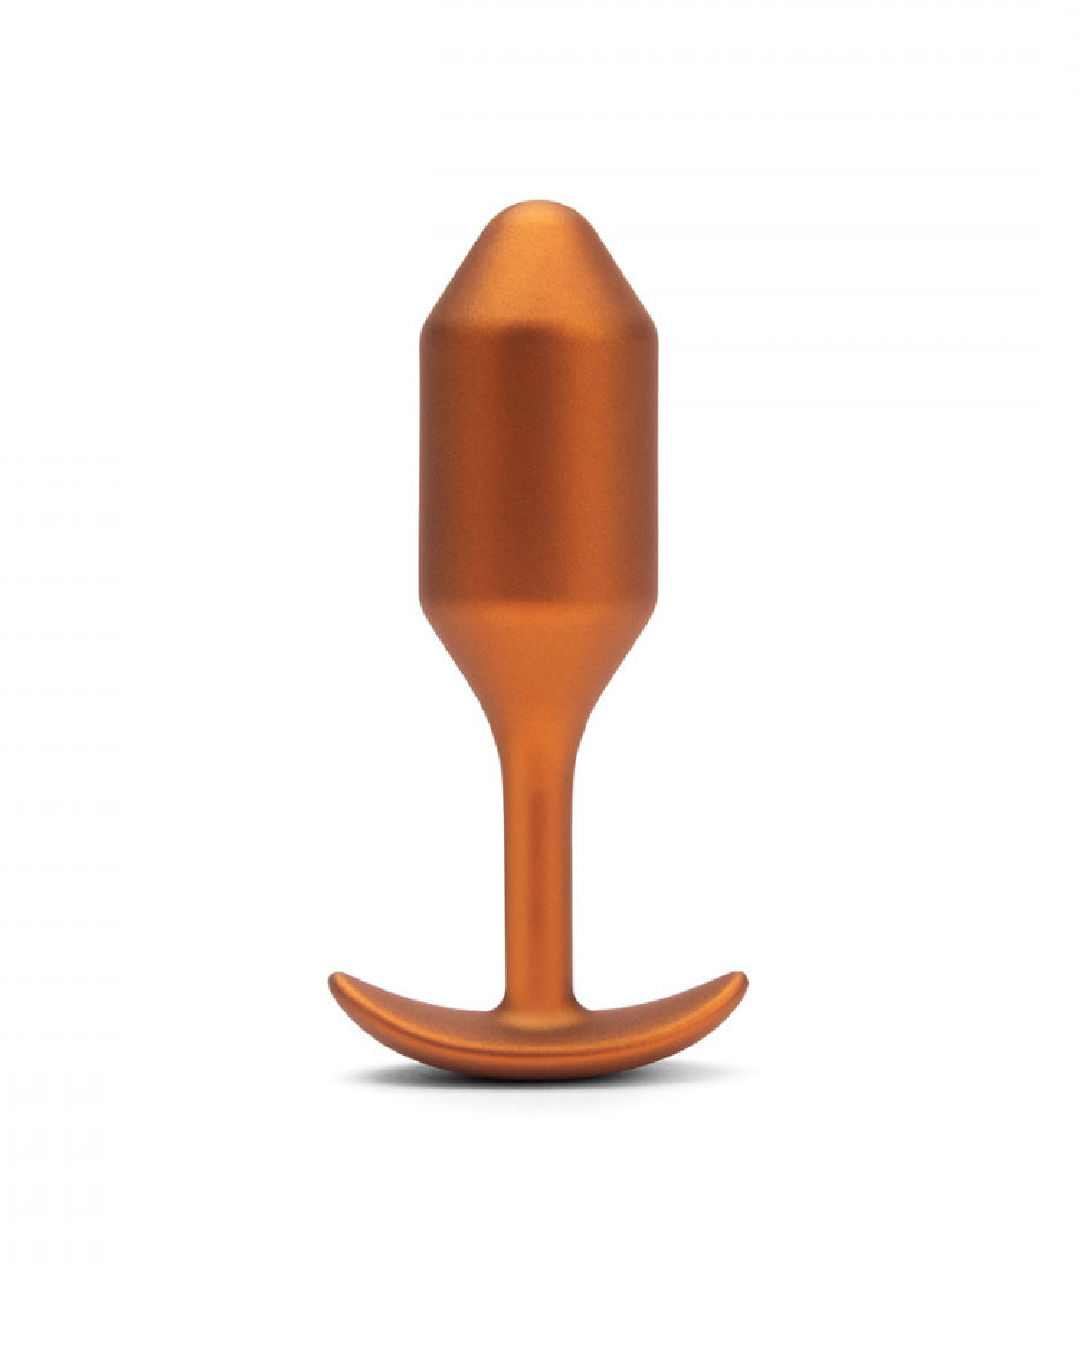 B-vibe Snug Plug 2 Weighted Silicone Butt Plug - 114 grams - Sunburst Orange